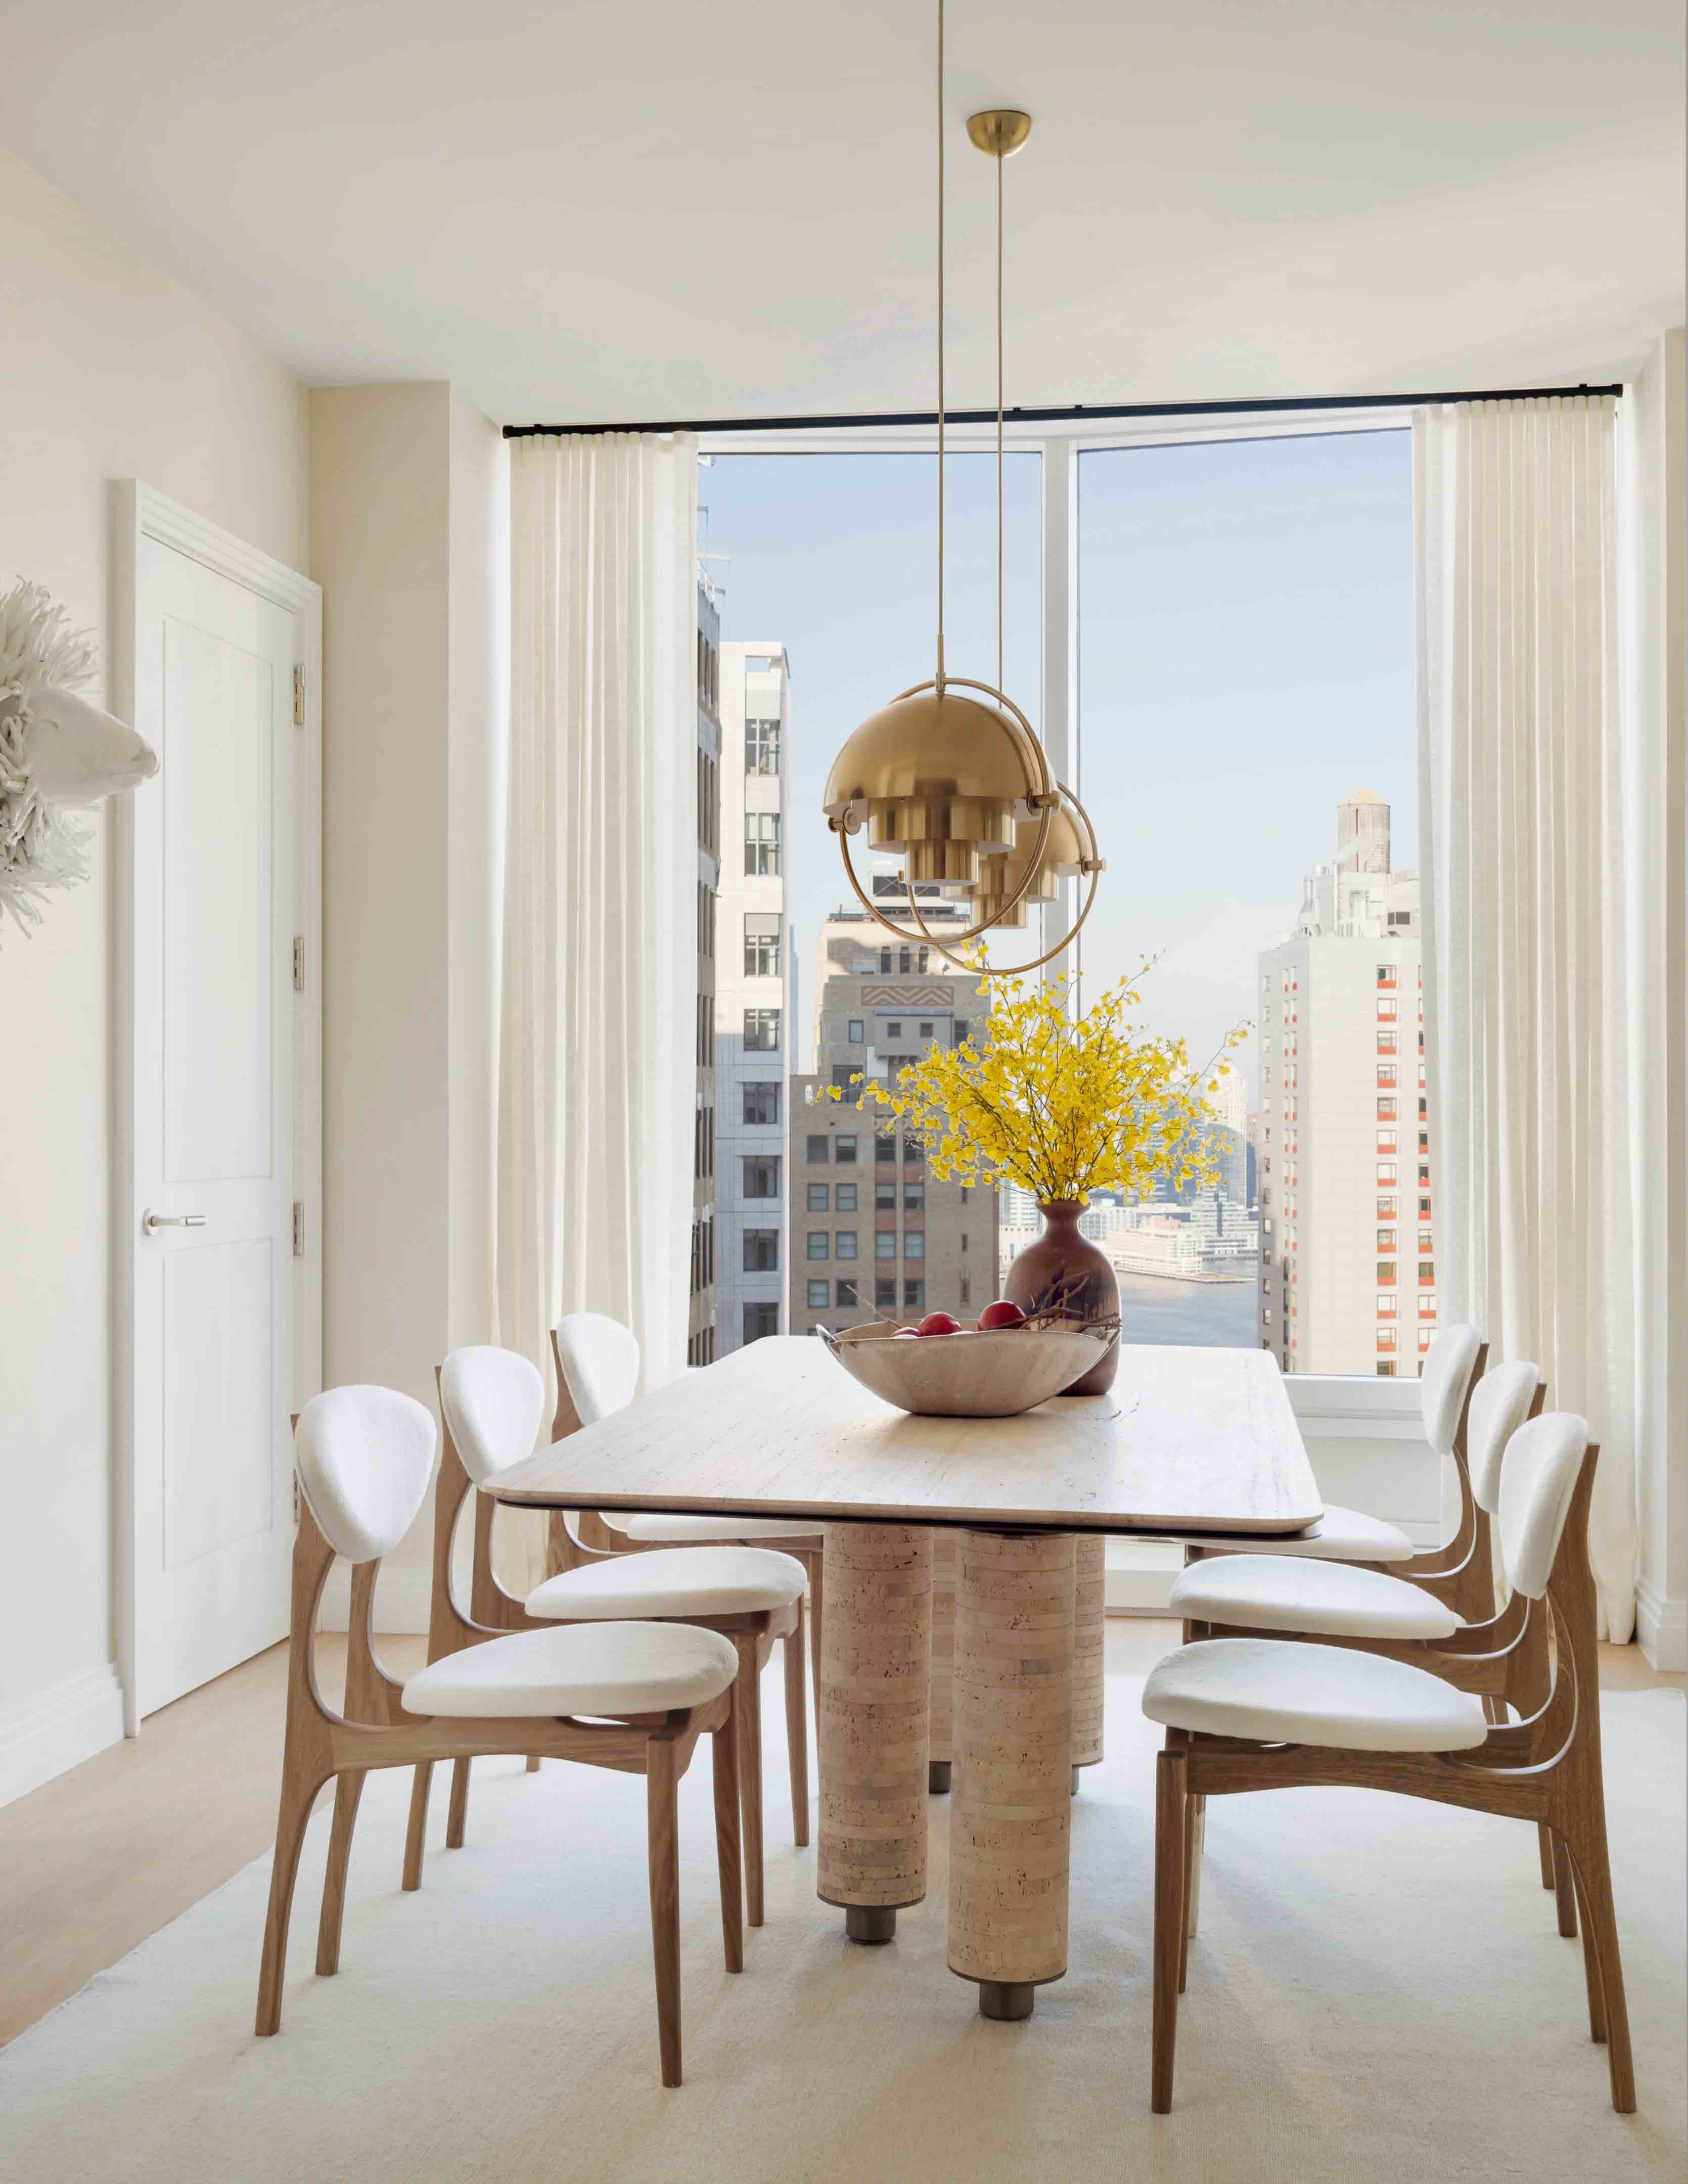 Deborah Berke Partners,纽约,公寓设计,高层公寓,公寓设计案例,华尔街1号,高级公寓